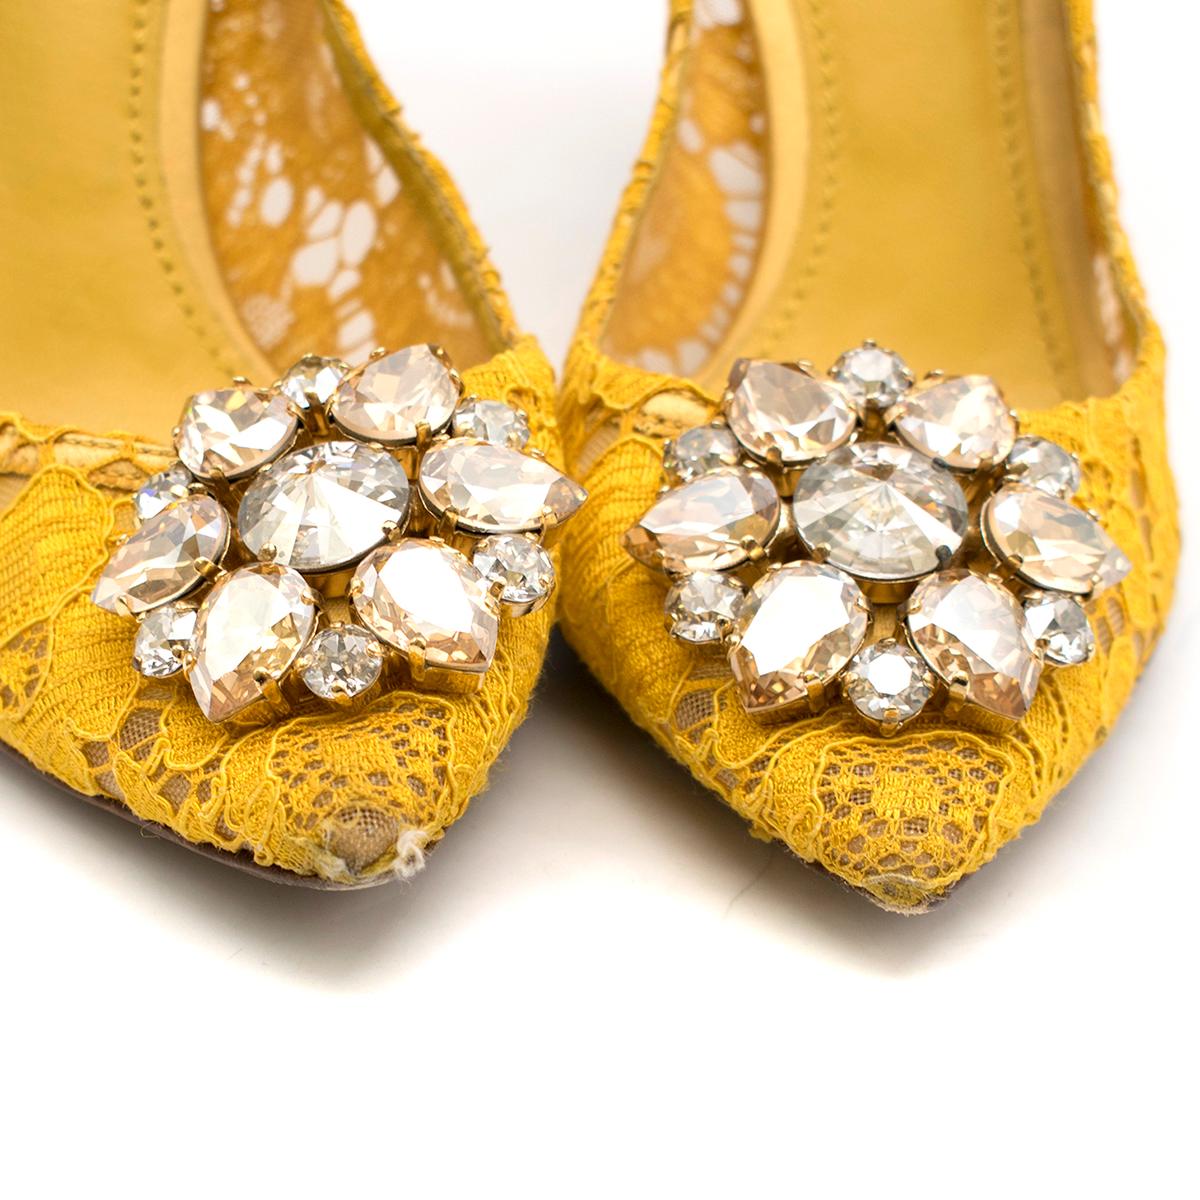 Women's Dolce & Gabbana Bellucci Taormina Yellow Lace Pumps - Current Season SIZE 37.5